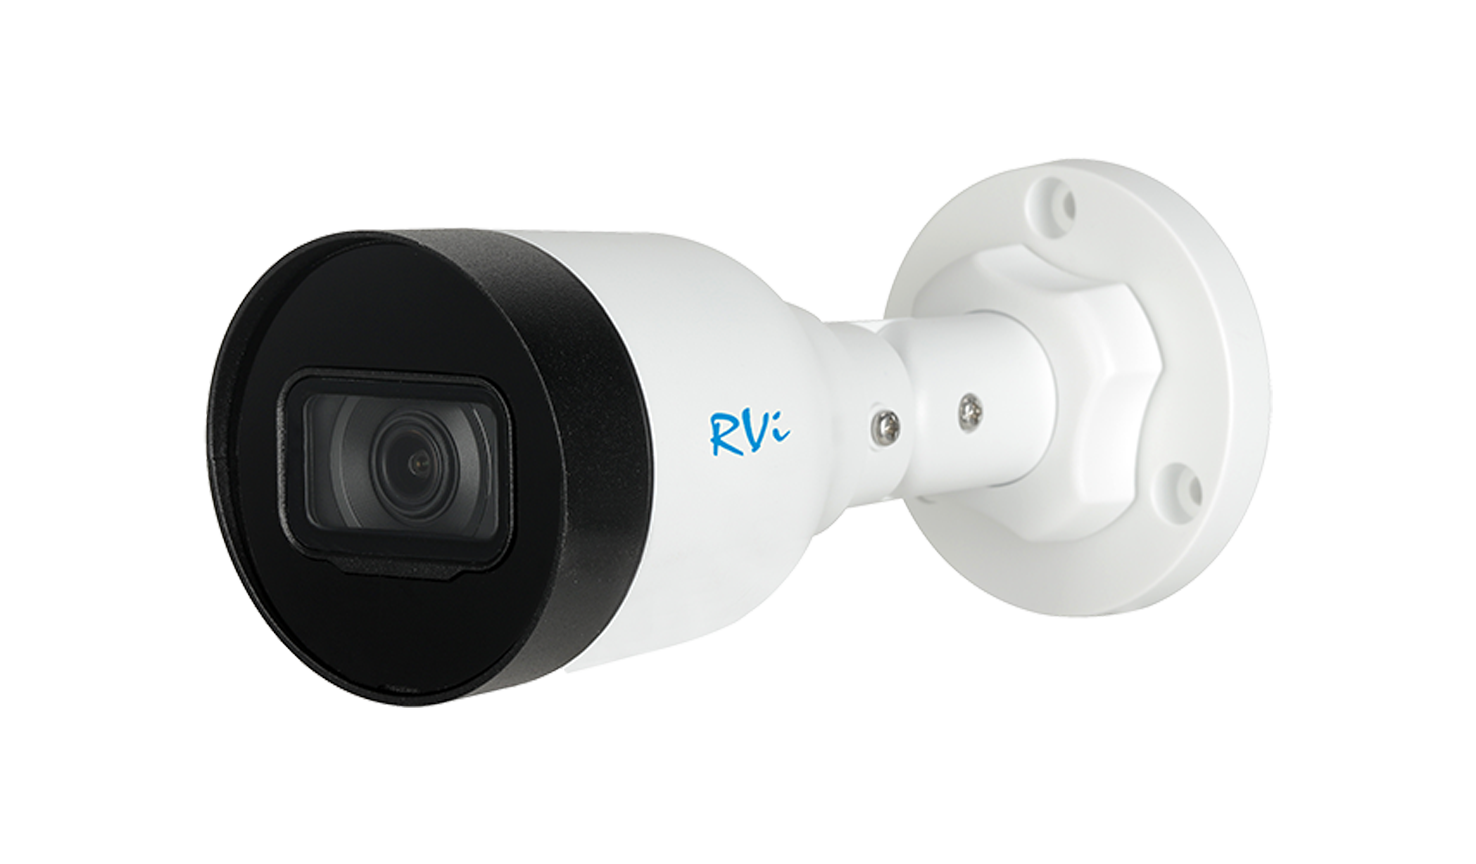 RVi - 1NCT 2010 (2 8)  white  Уличная IP камера 1080P, 20 к/с,  1/2 7”, ИК- до 30 м,  H 265+, DC 12В/PoE ,  IP67 , -40     60 °С